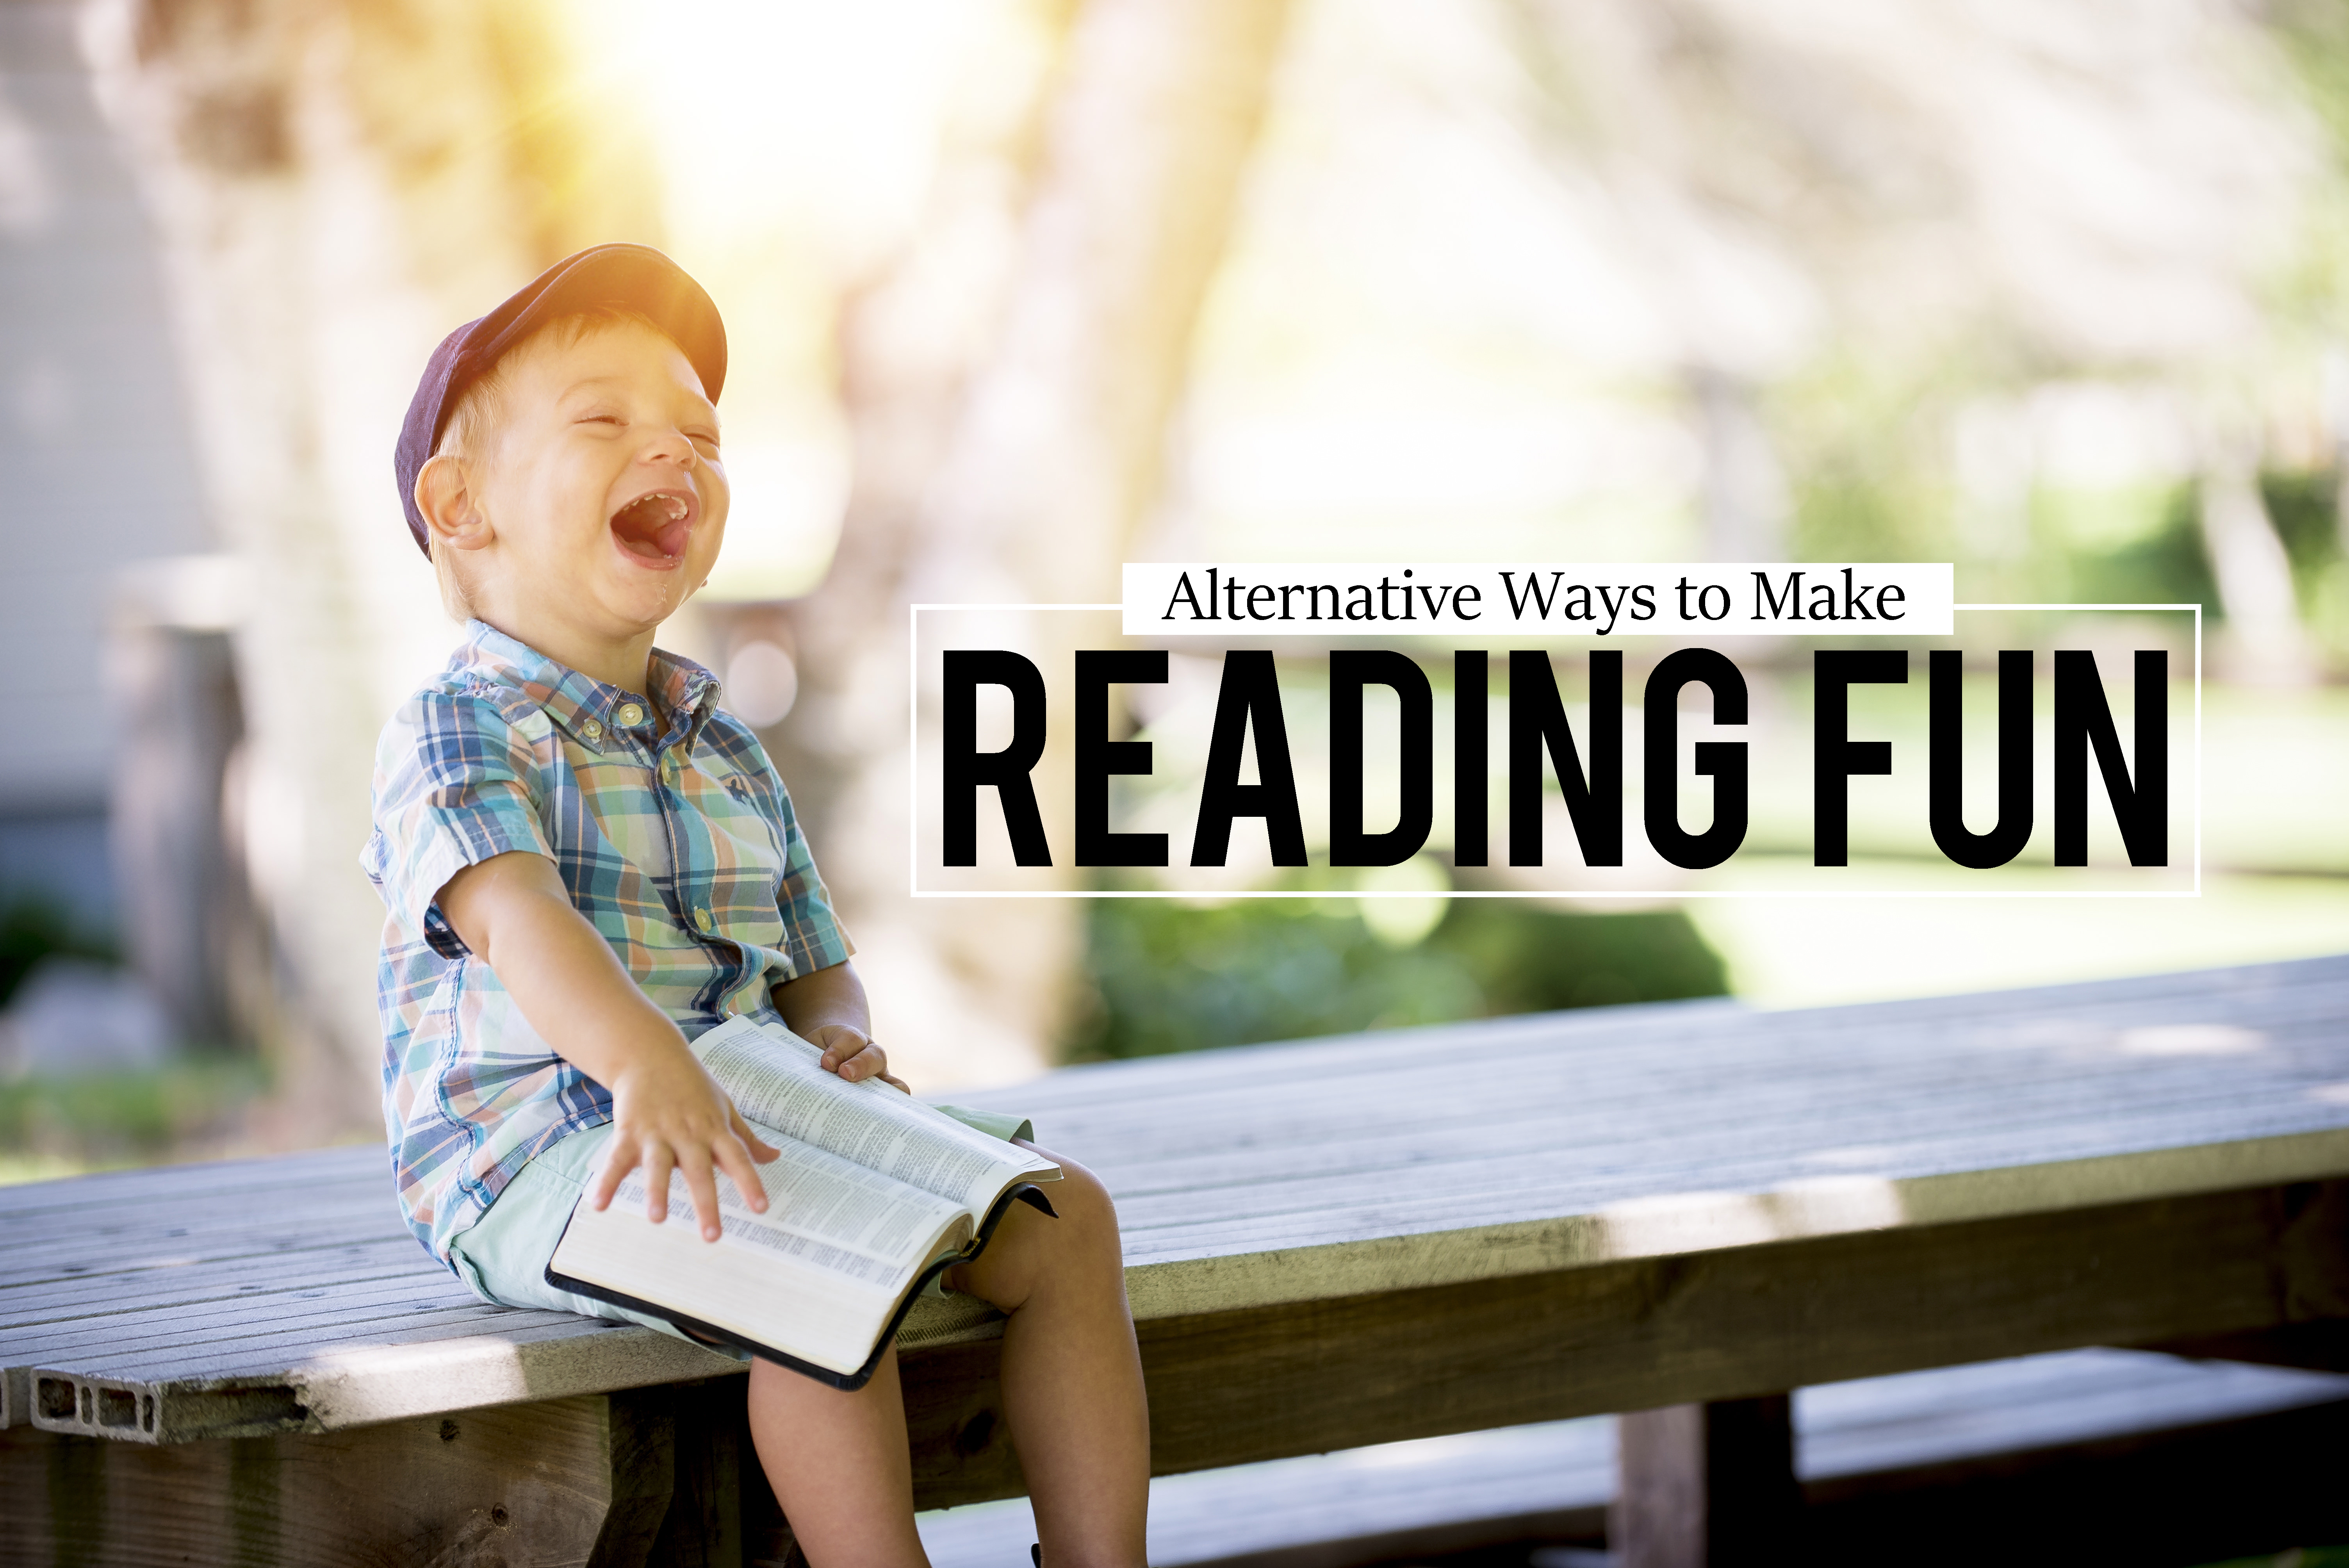 4 Alternative Ways to Make Reading Fun